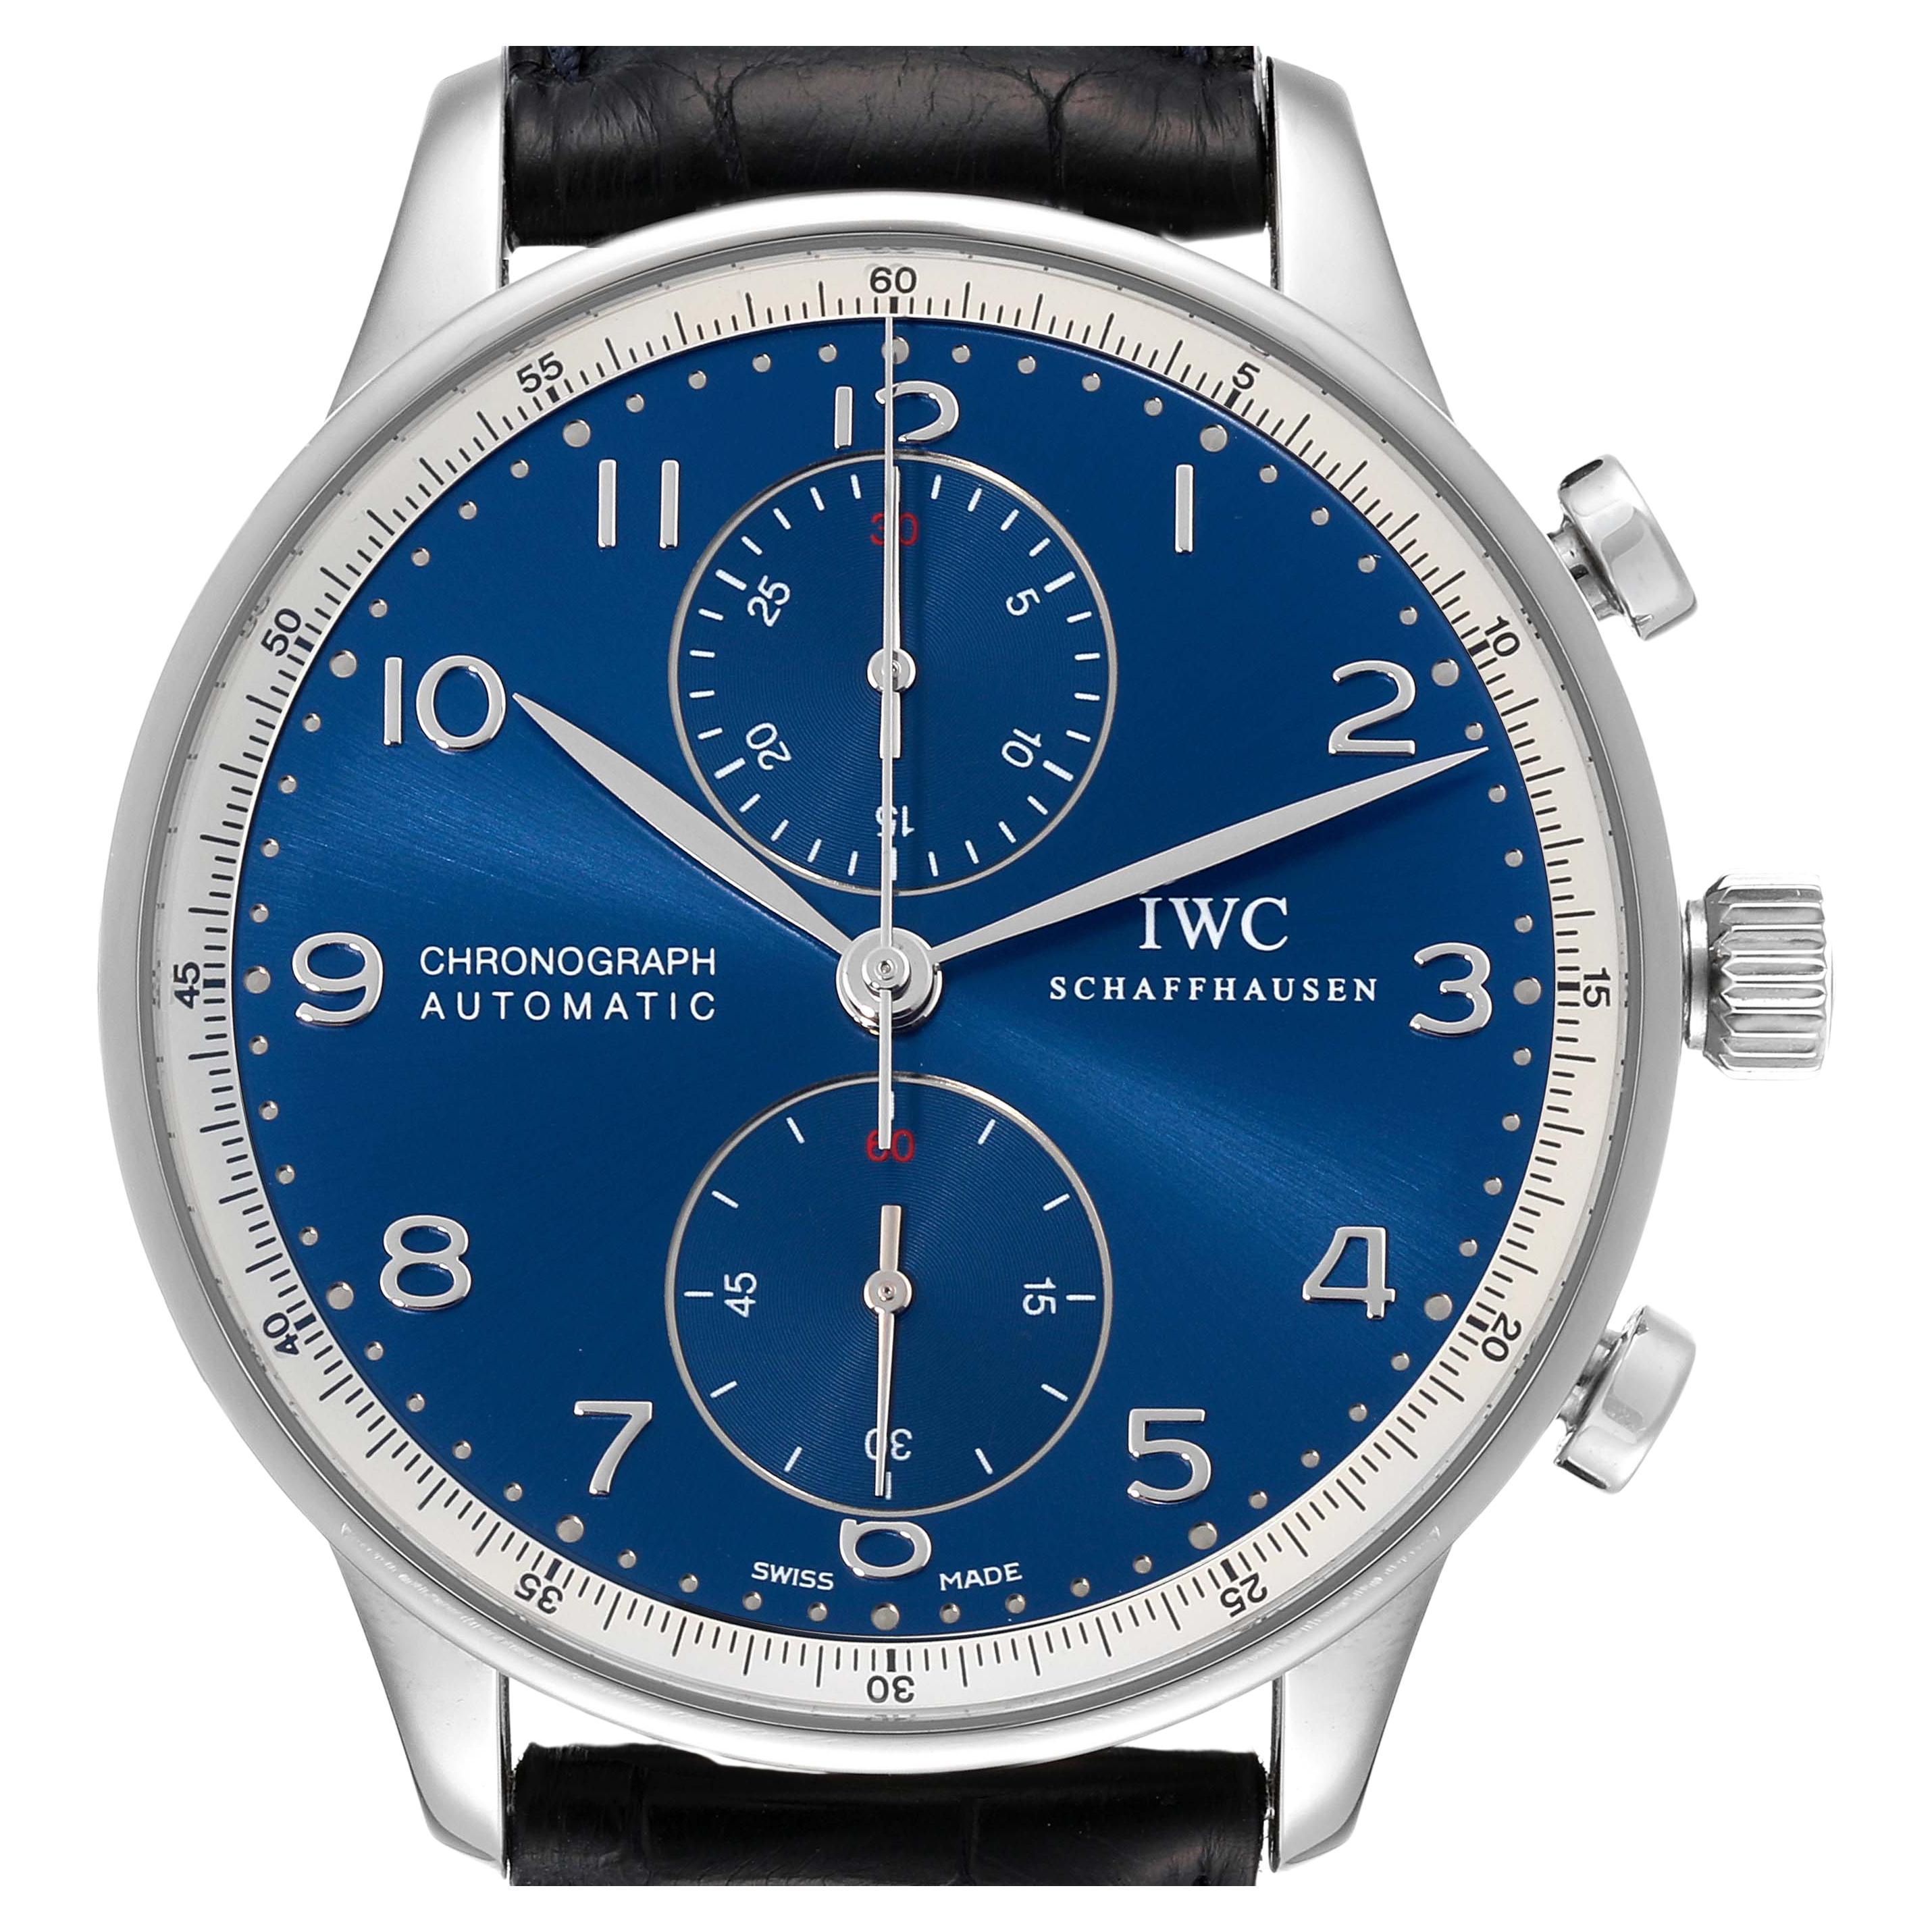 IWC Portugieser Chronograph blaues Zifferblatt Stahl Herrenuhr IW371432 Box Card im Angebot